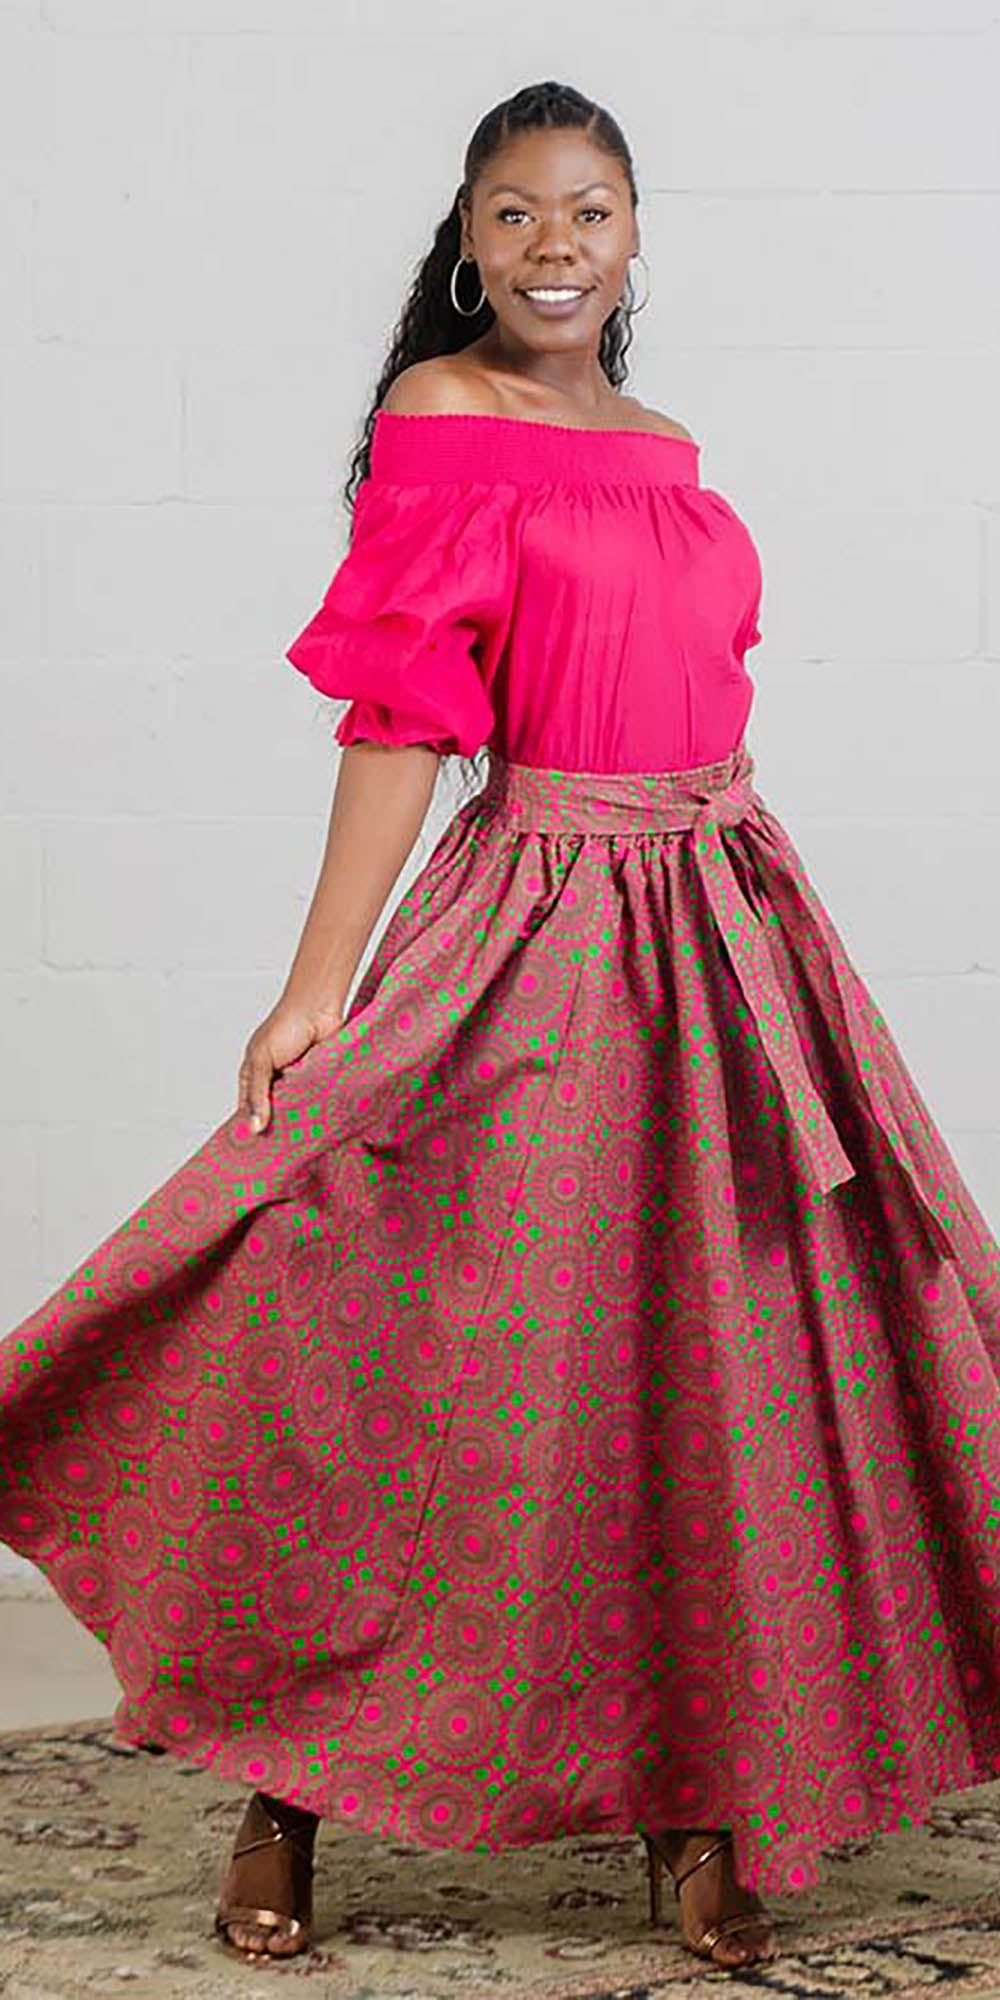 KaraChic 7001-522-Red/Pink - Womens African Print Maxi (Long) Skirt With Elastic Waist & Sash